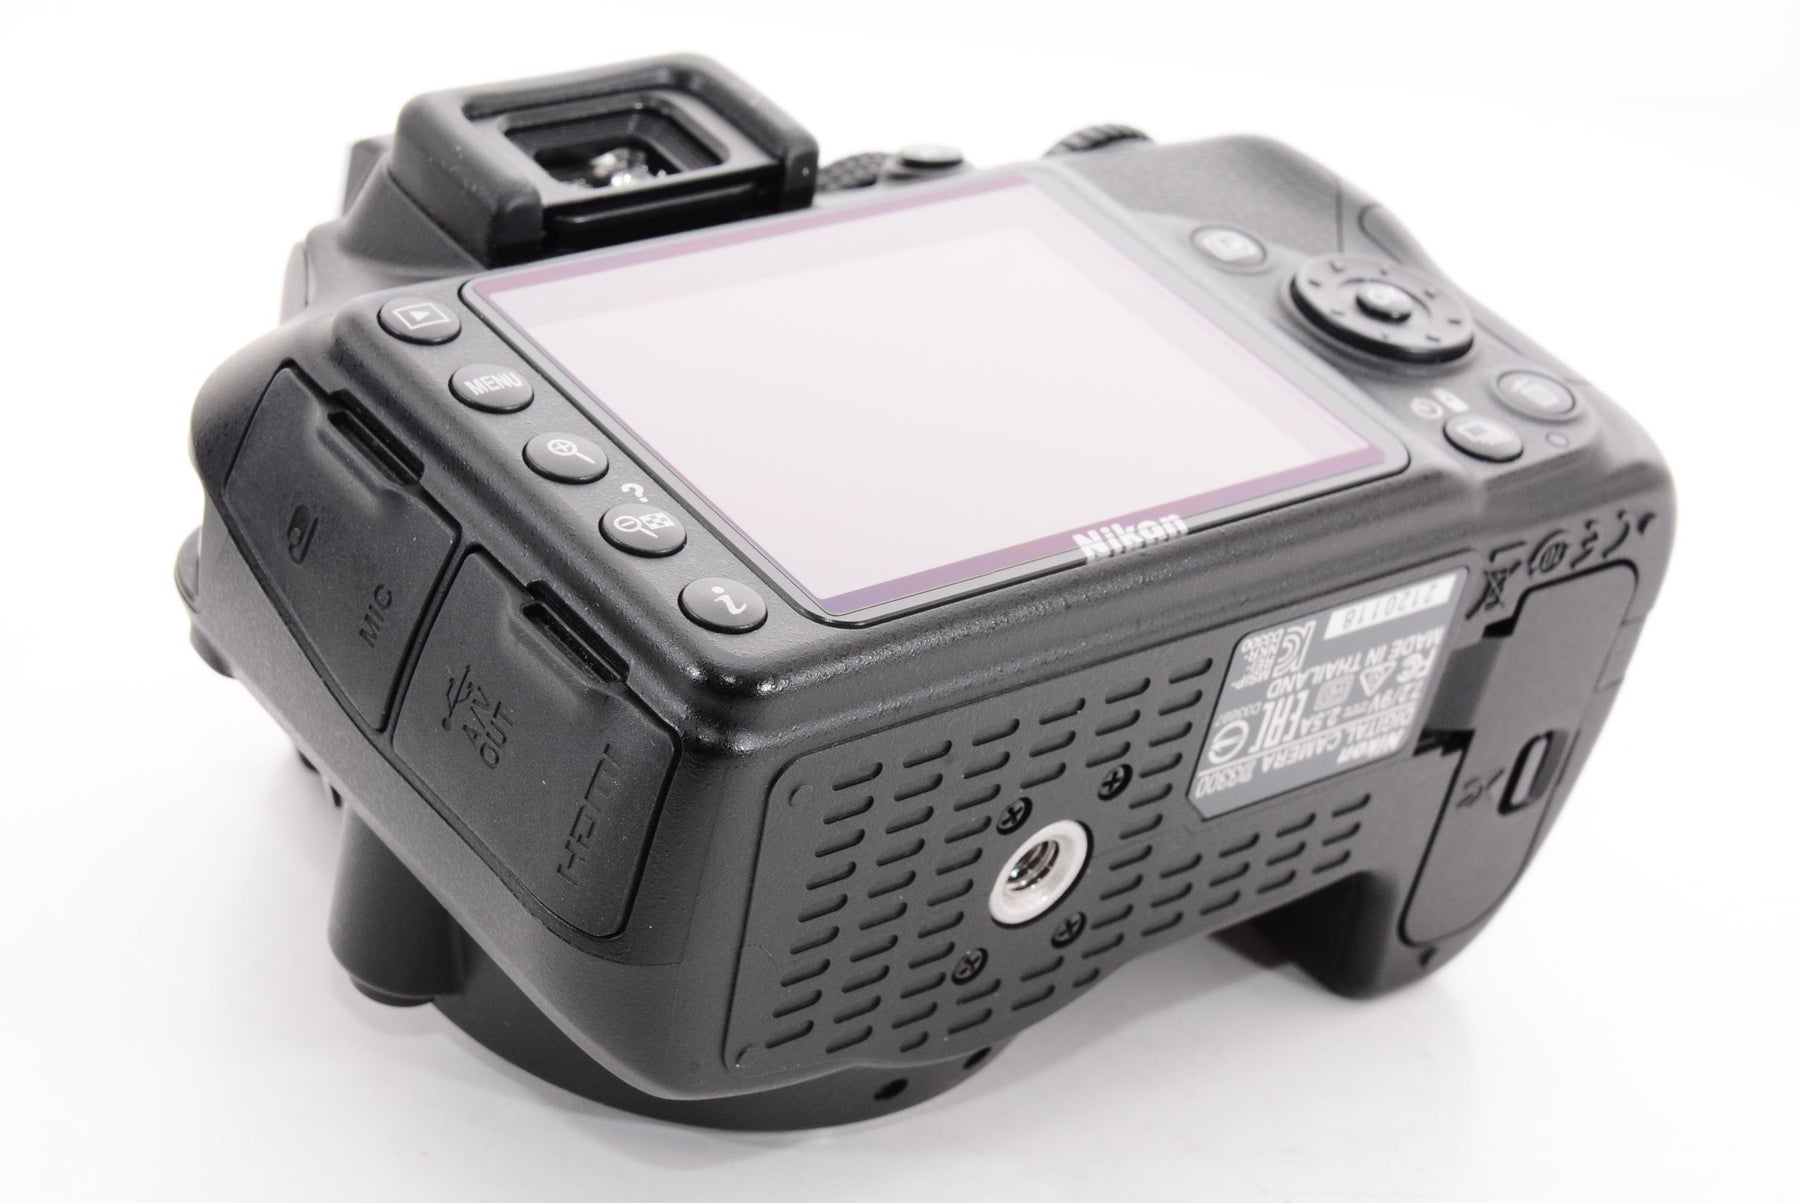 Nikon デジタル一眼レフカメラ D3300 18-55 VR IIレンズキット ブラック D3300LKBK - 1